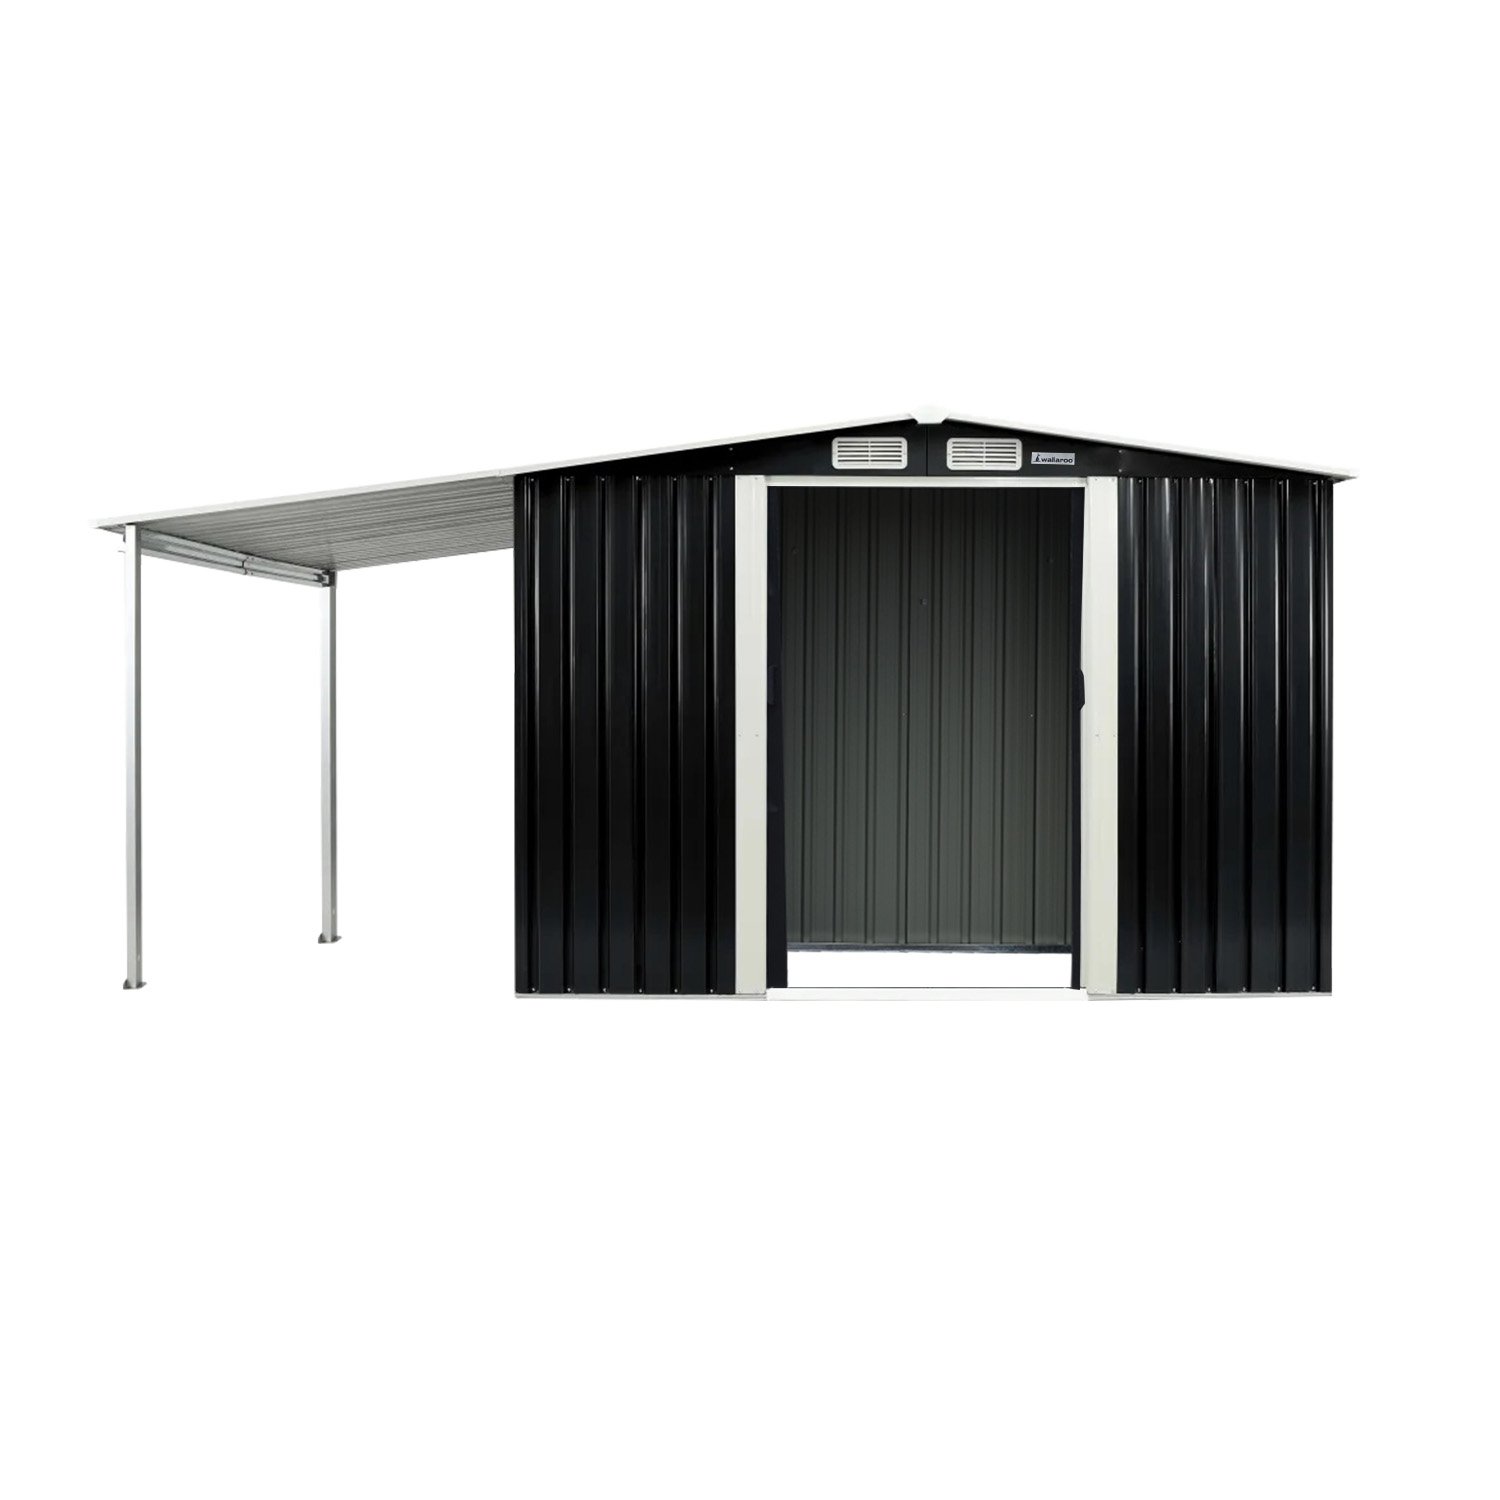 Wallaroo 6x8ft Zinc Steel Garden Shed with Open Storage - Black 2